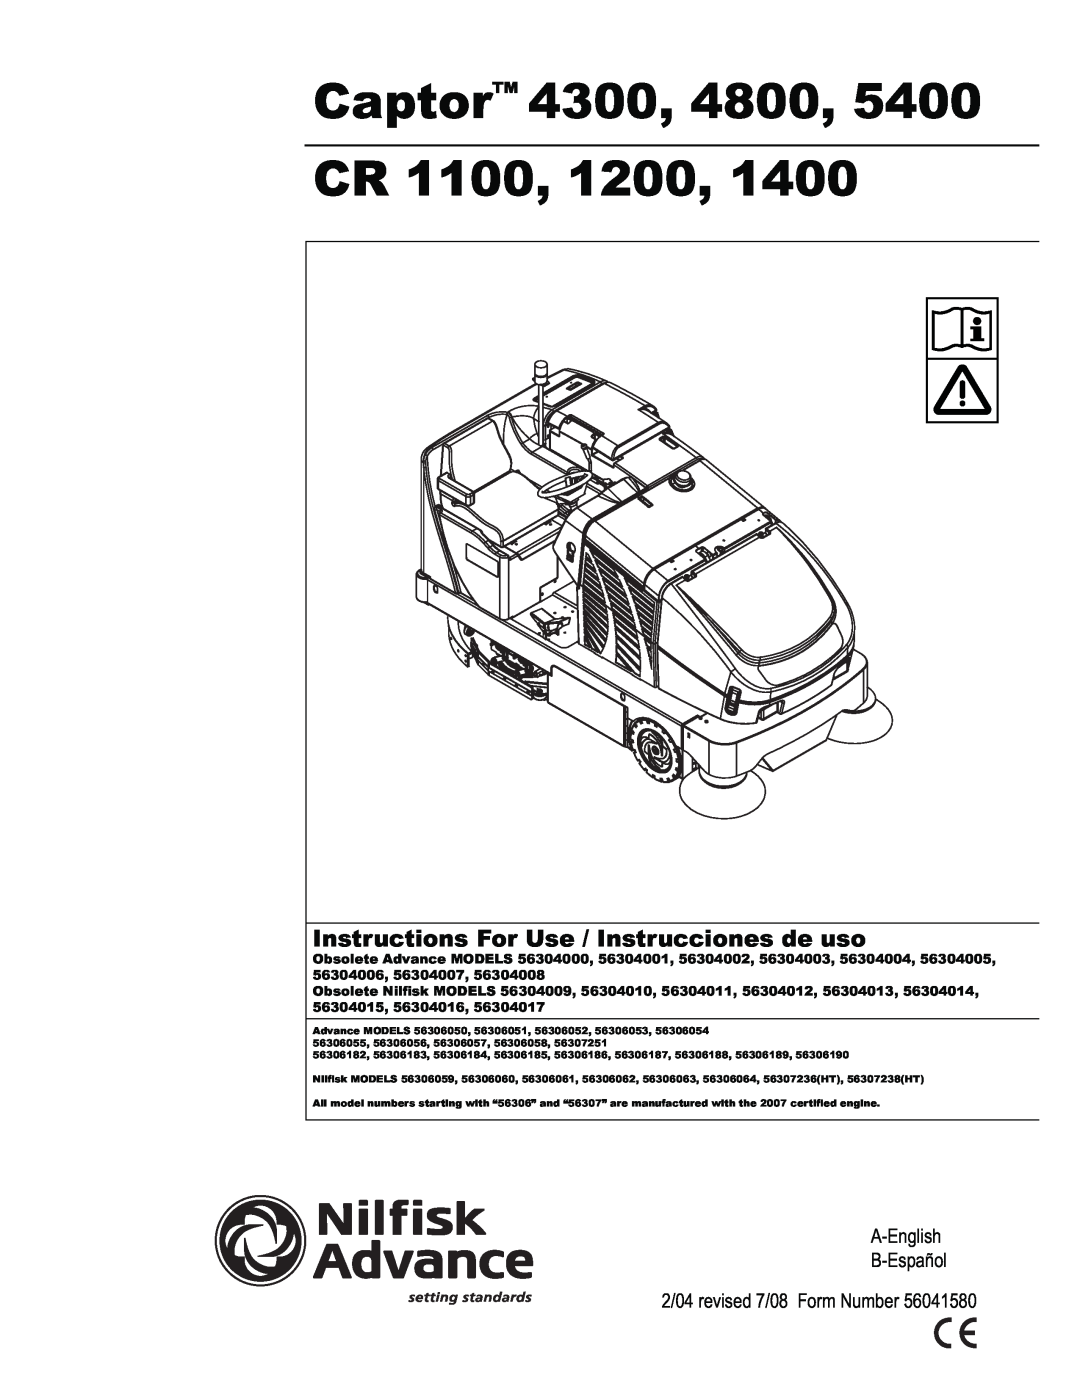 Nilfisk-ALTO 5400 manual Instructions For Use / Instrucciones de uso, Captor 4300, 4800, CR 1100, 1200 